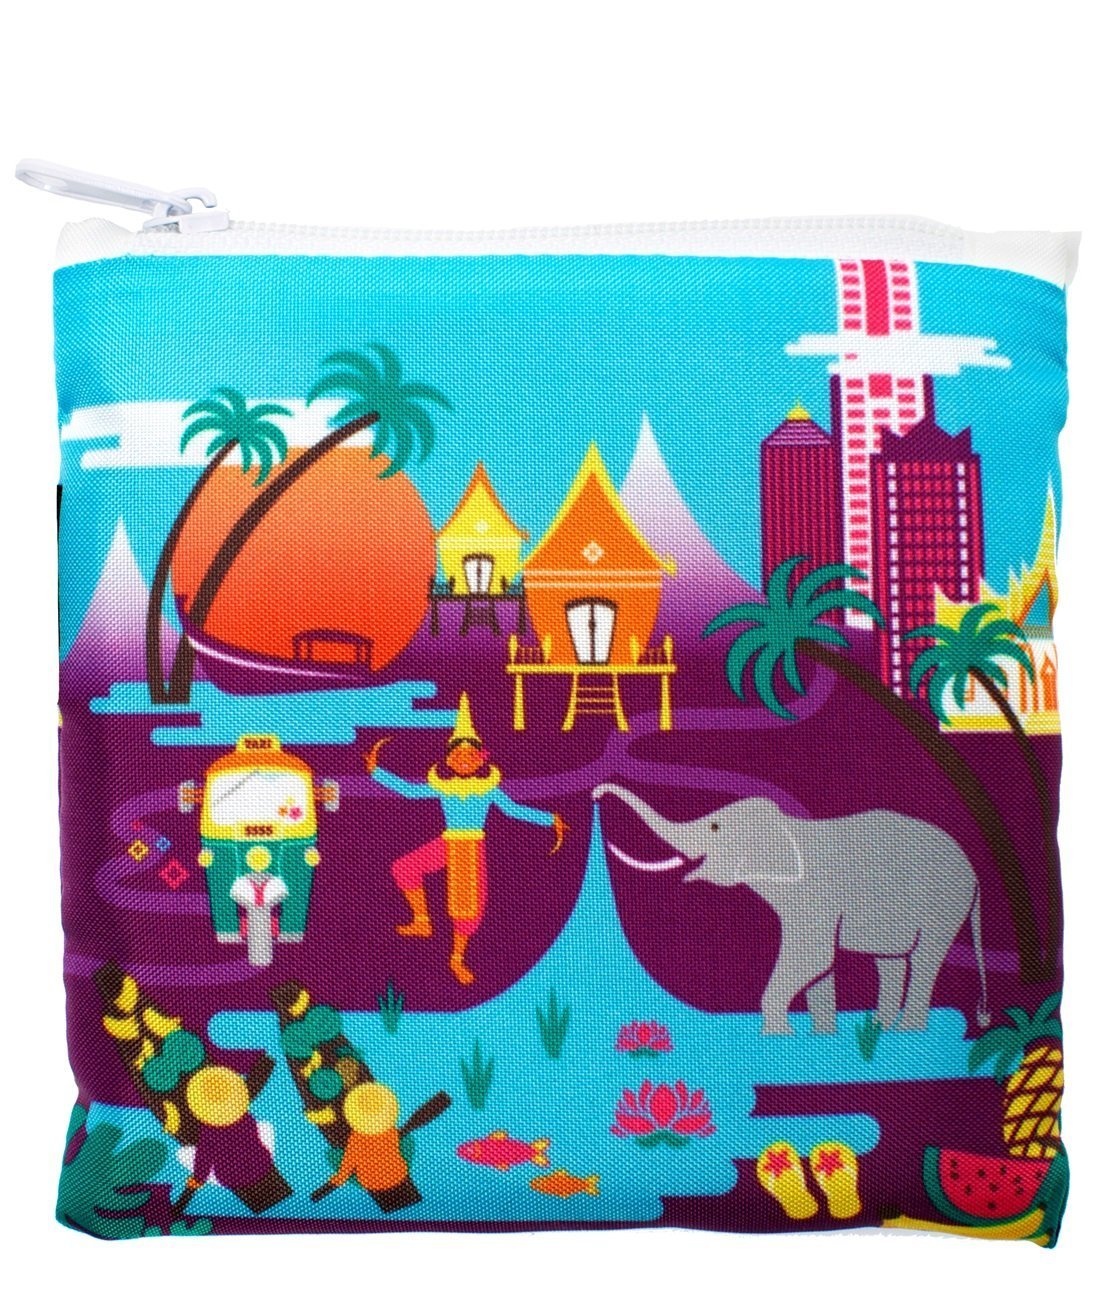 LOQI Urban Thailand Reusable Shopping Bag